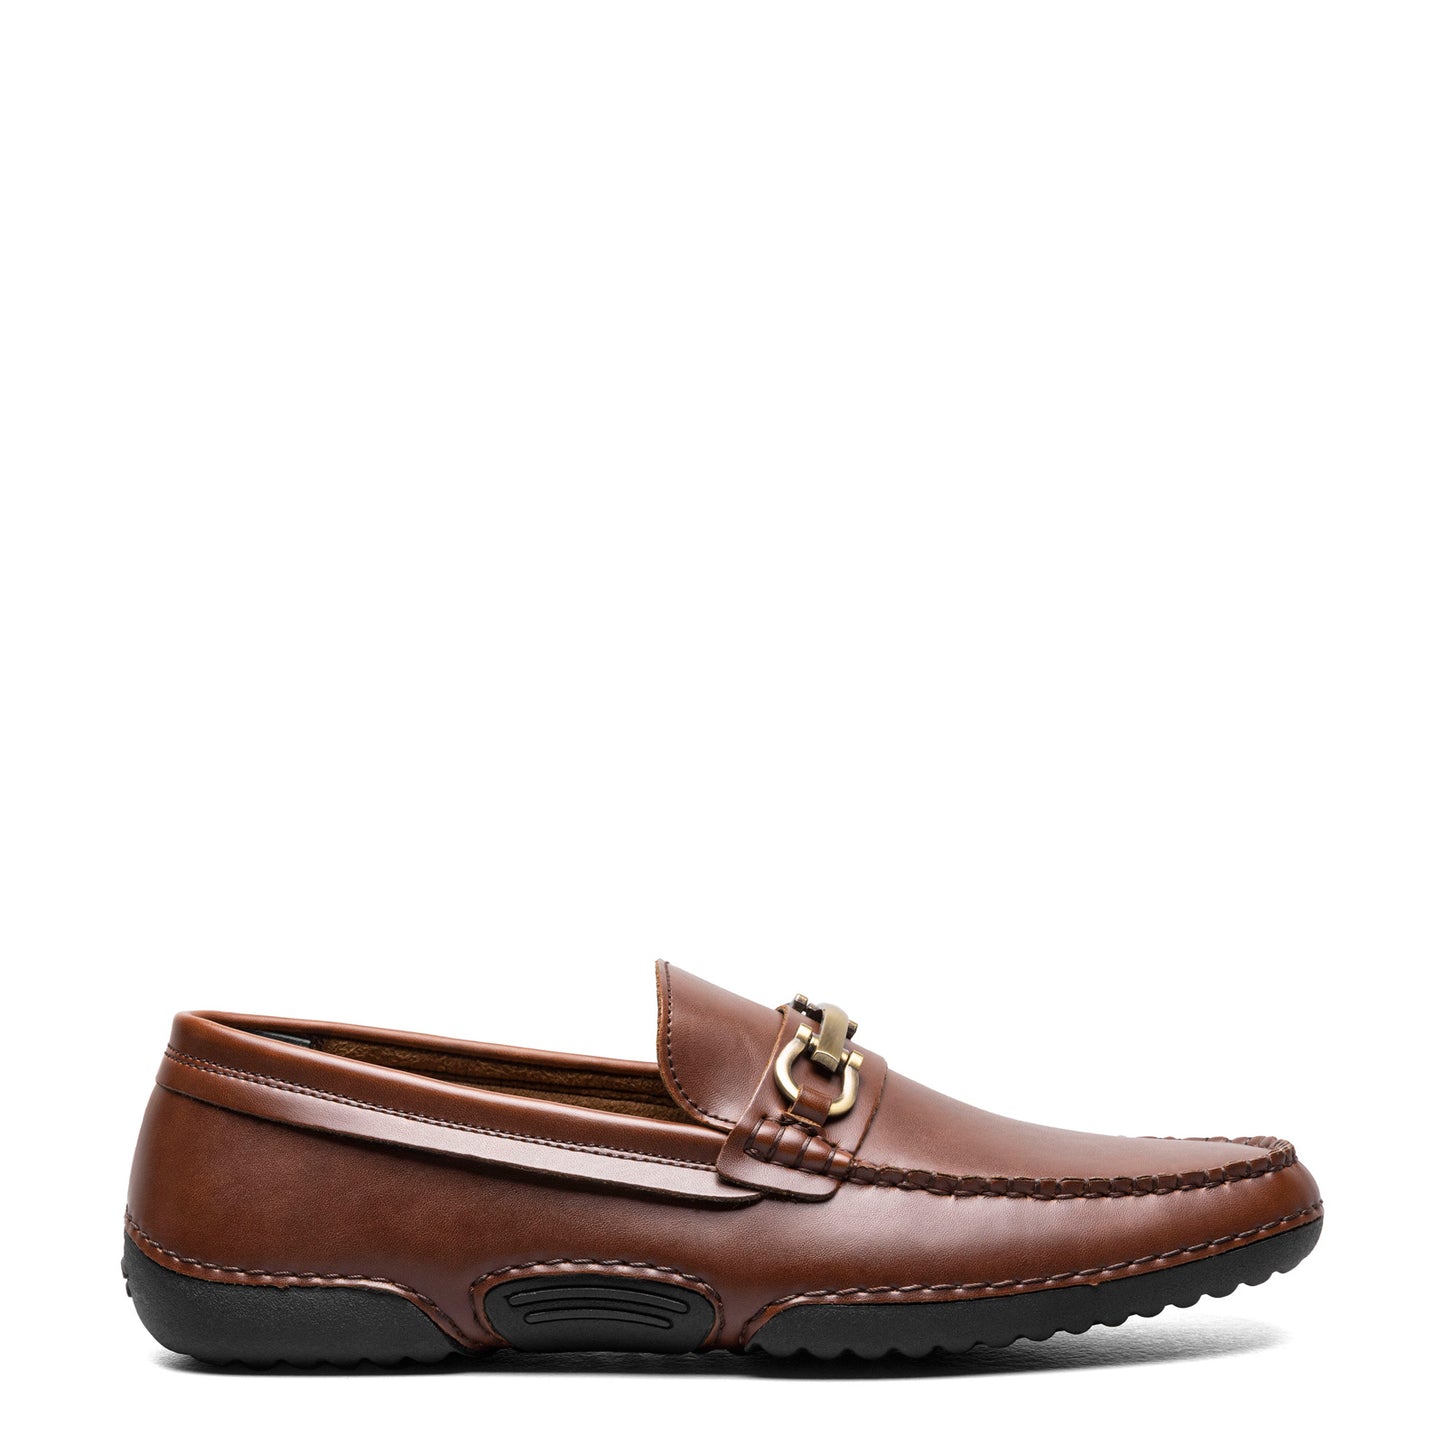 Peltz Shoes  Men's Stacy Adams Delano Moc Toe Slip-On BROWN 25609-200